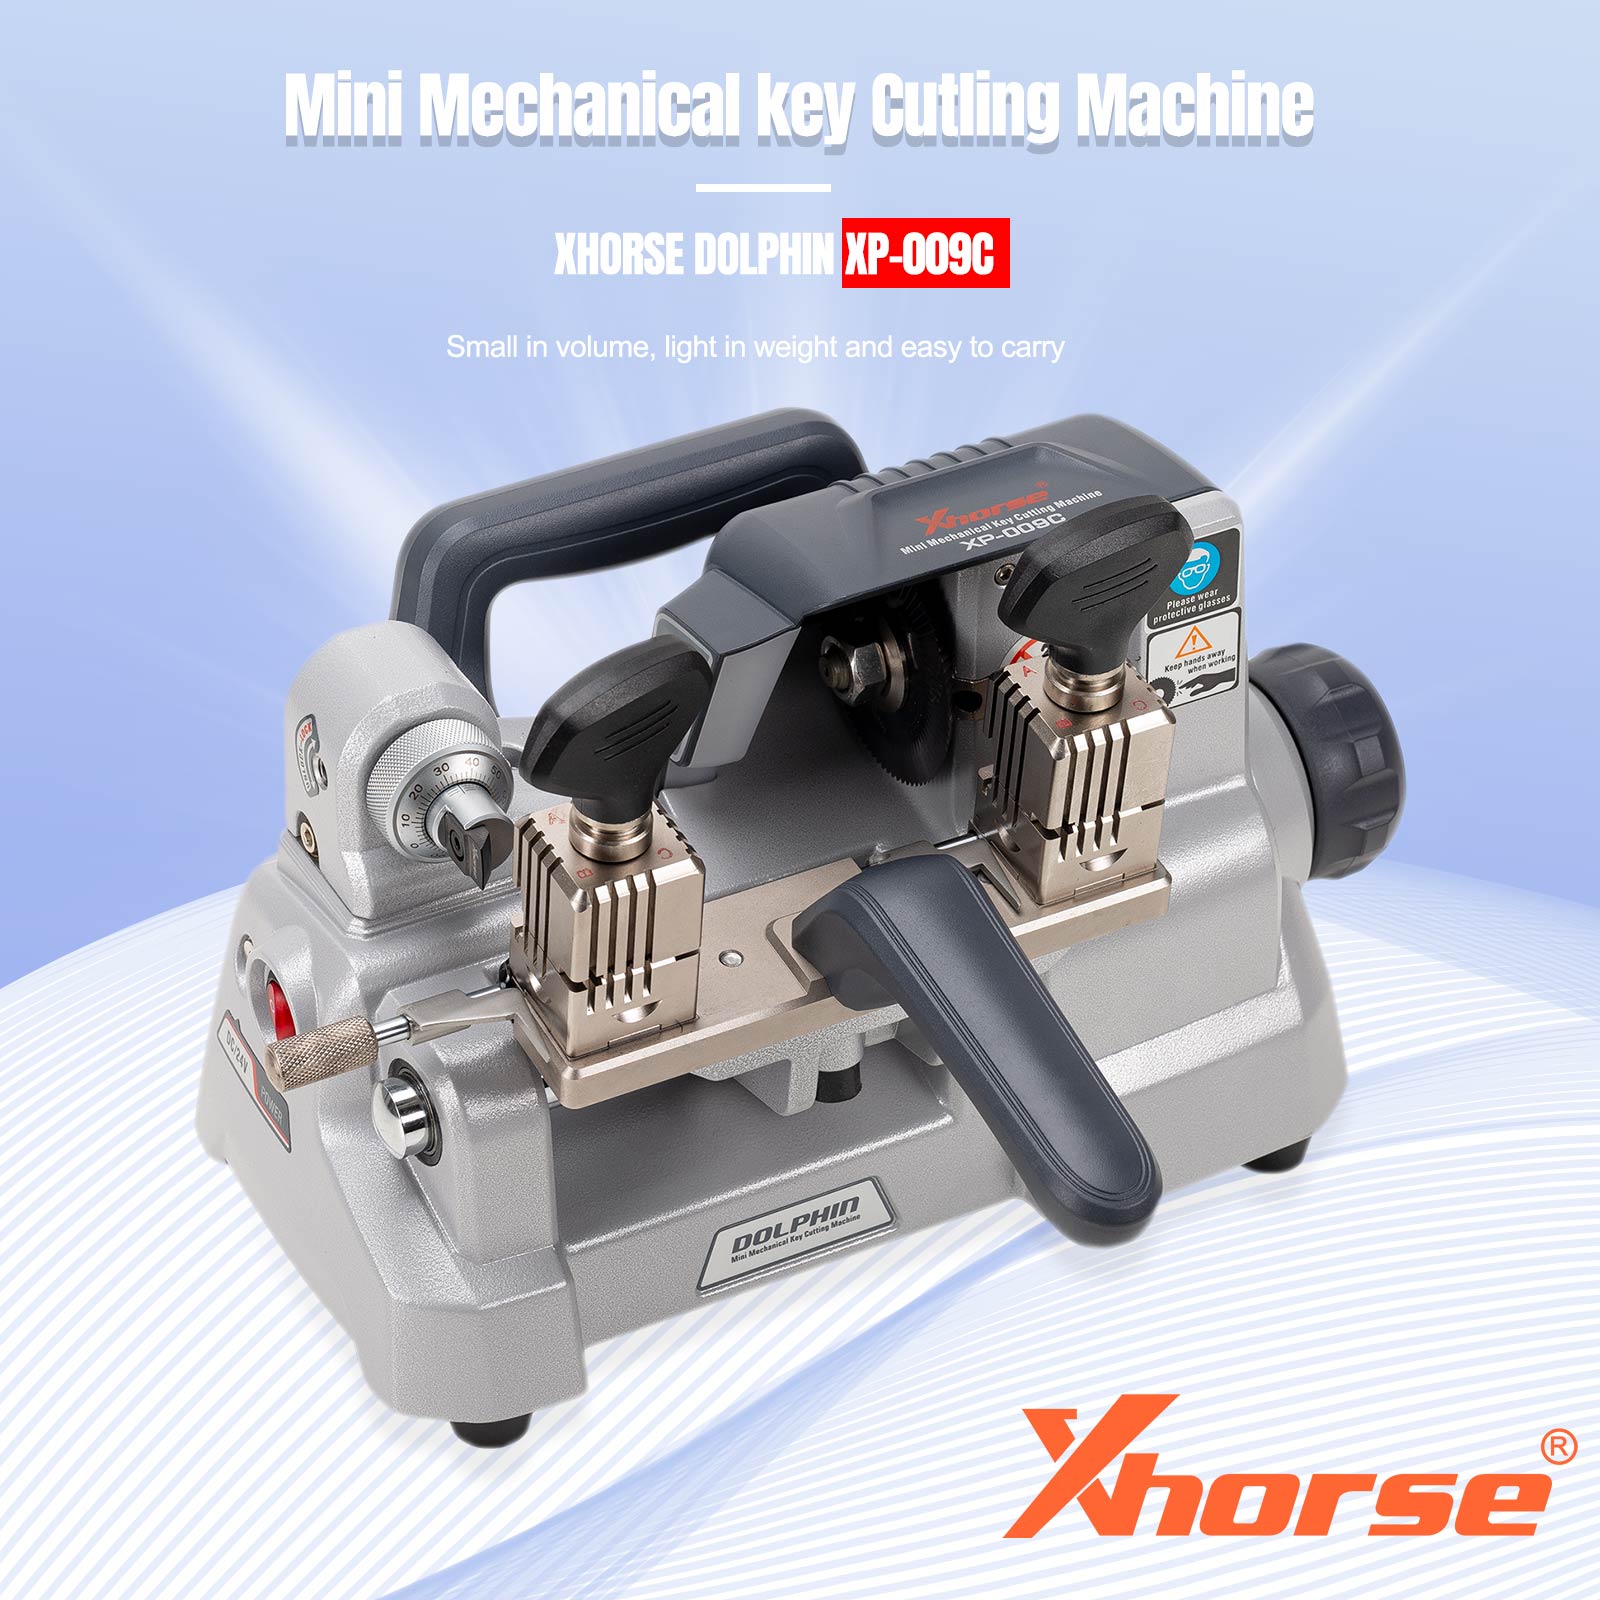 xhorse xp-009c key cutting machine